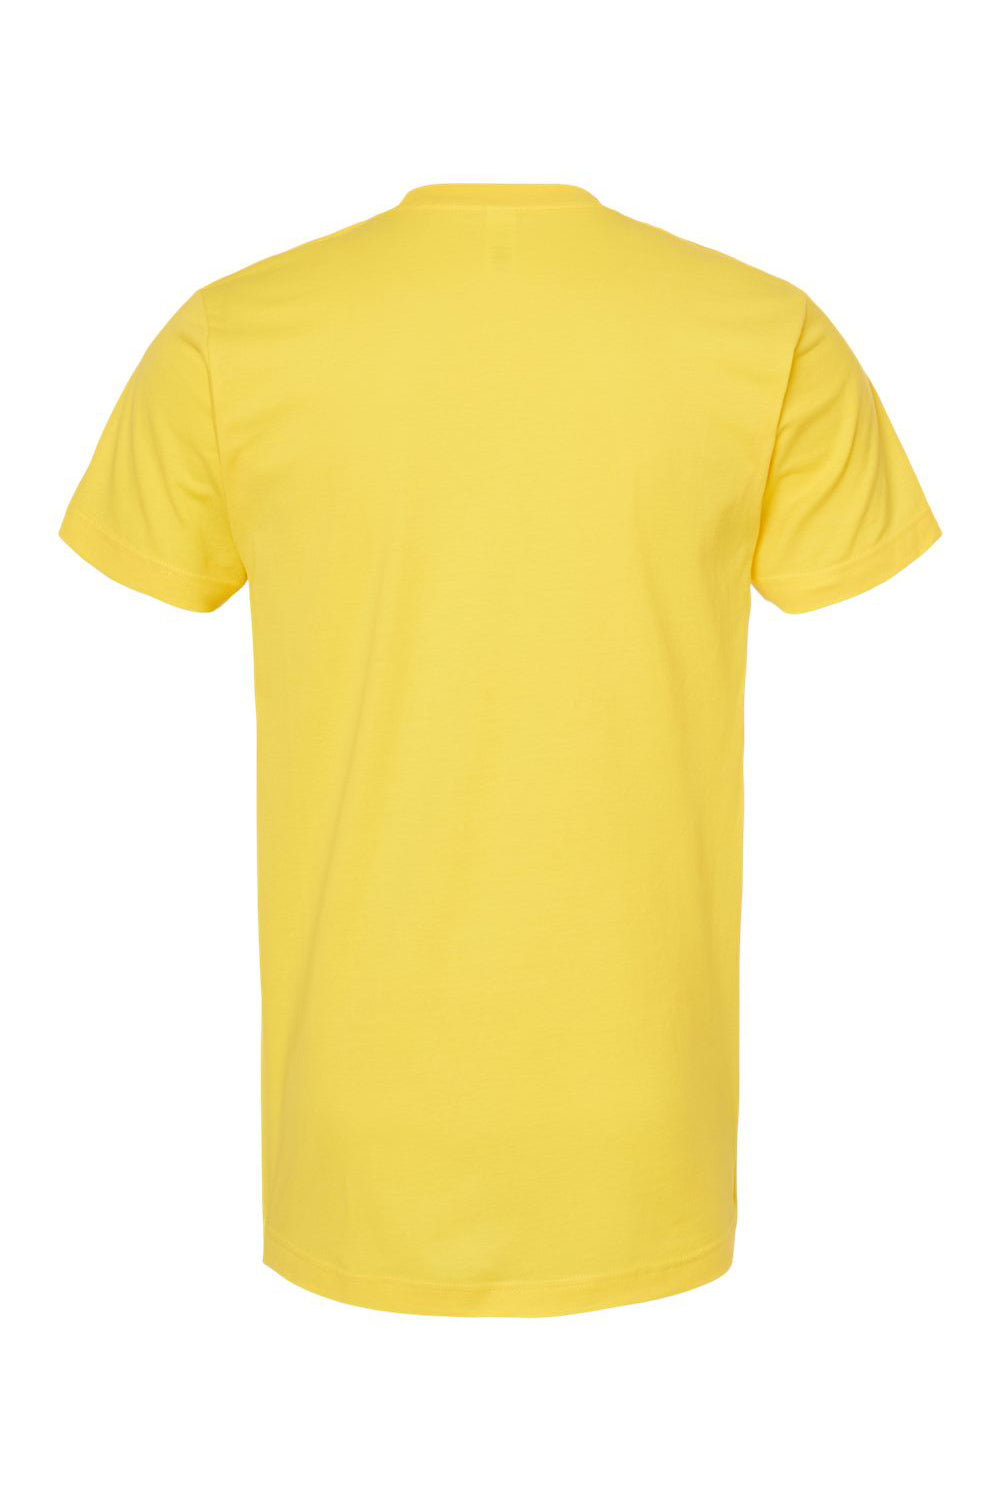 Tultex 202 Mens Fine Jersey Short Sleeve Crewneck T-Shirt Sunshine Yellow Flat Back